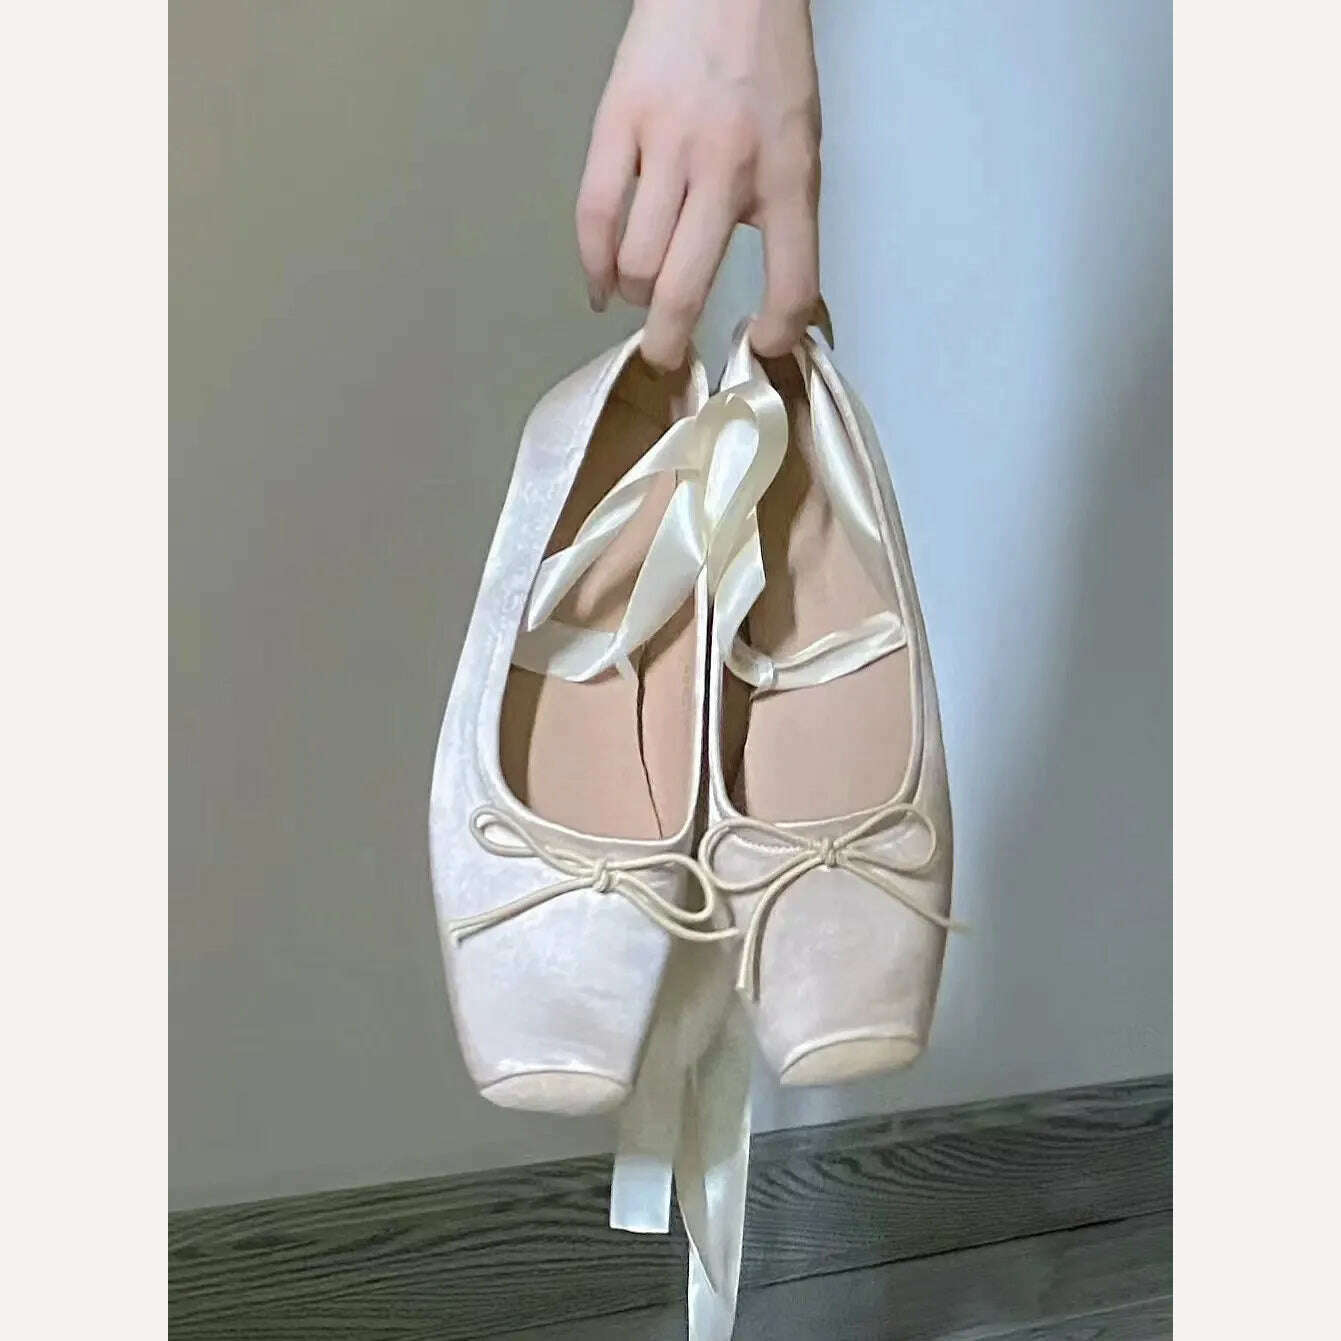 KIMLUD, NEW Fashion Classic Silk Ballet Shoes Lace up Ballet Shoes Women Square Toe Bowtie Women Flats Elegant Valentine Shoes, Apricot / 35, KIMLUD Women's Clothes